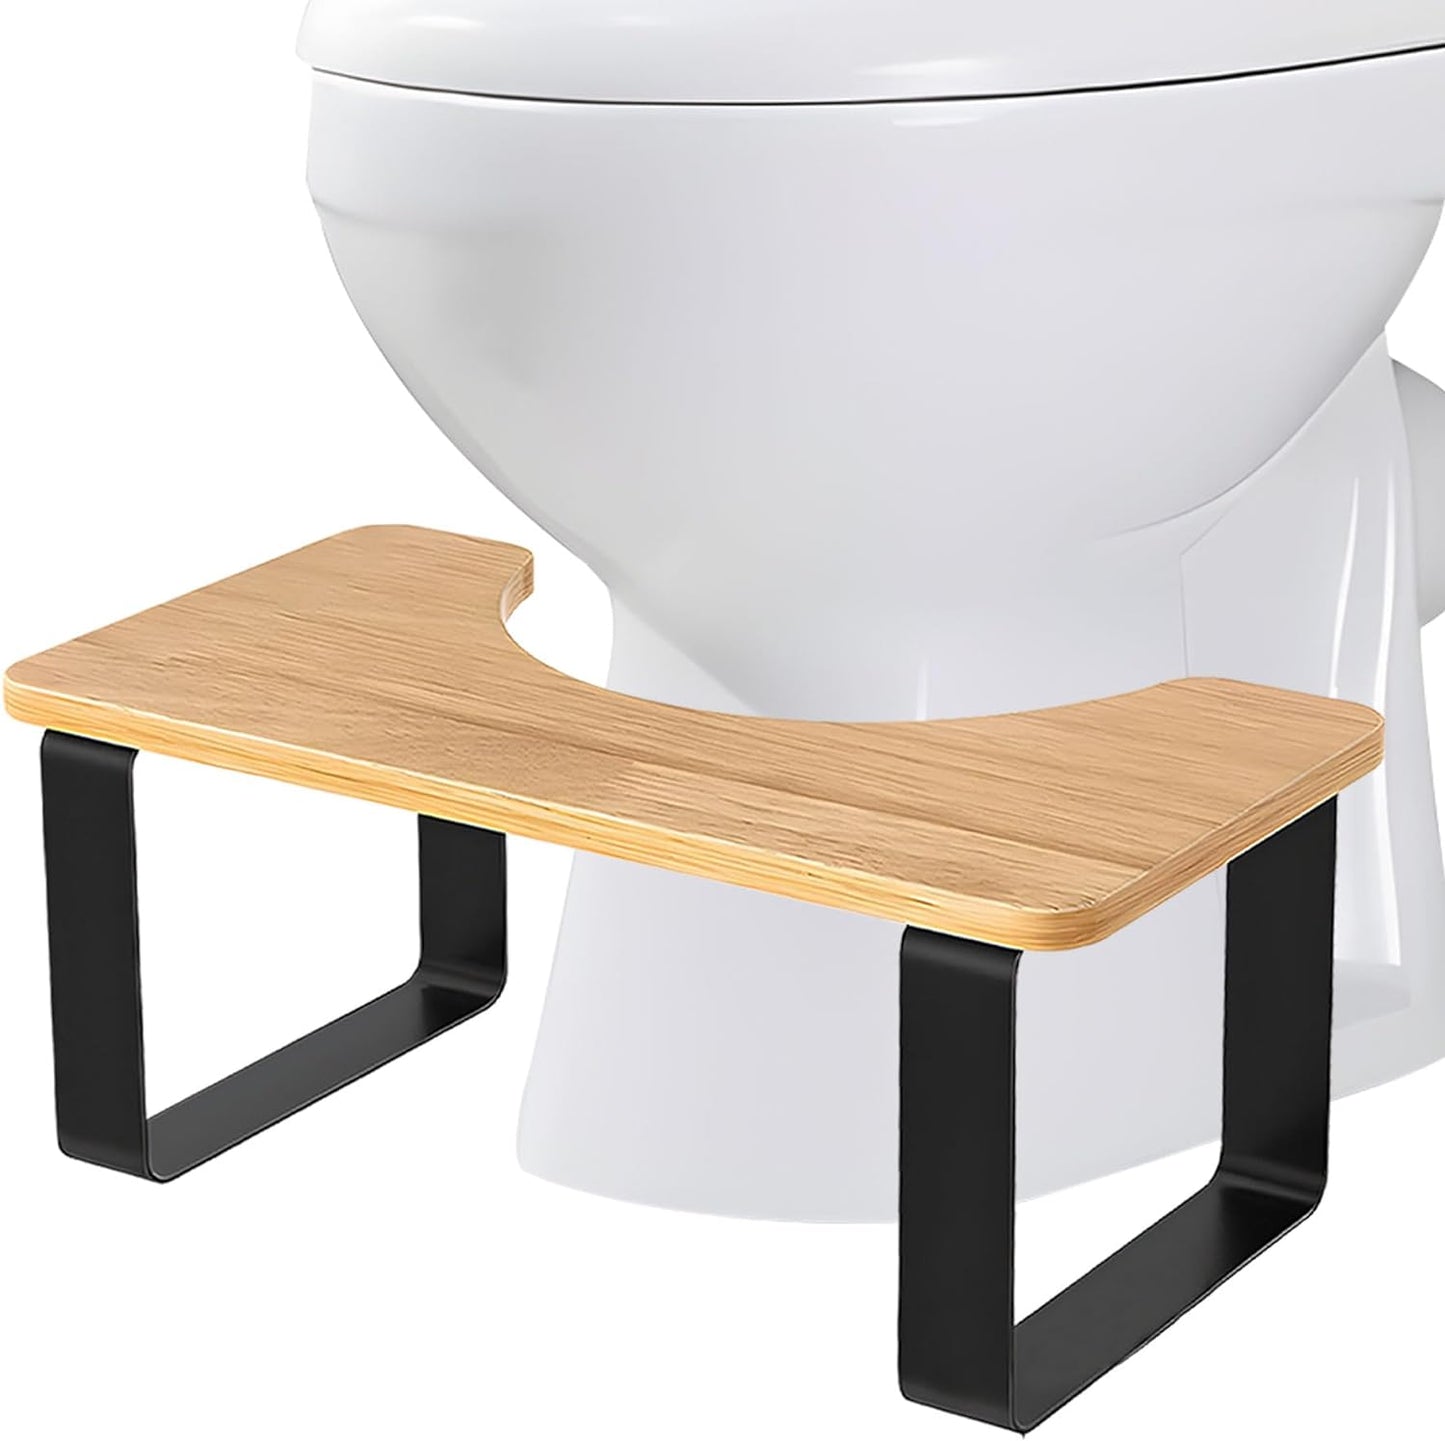 Toilet Stool Adult, Metal with Wood Squatting Toilet Stool